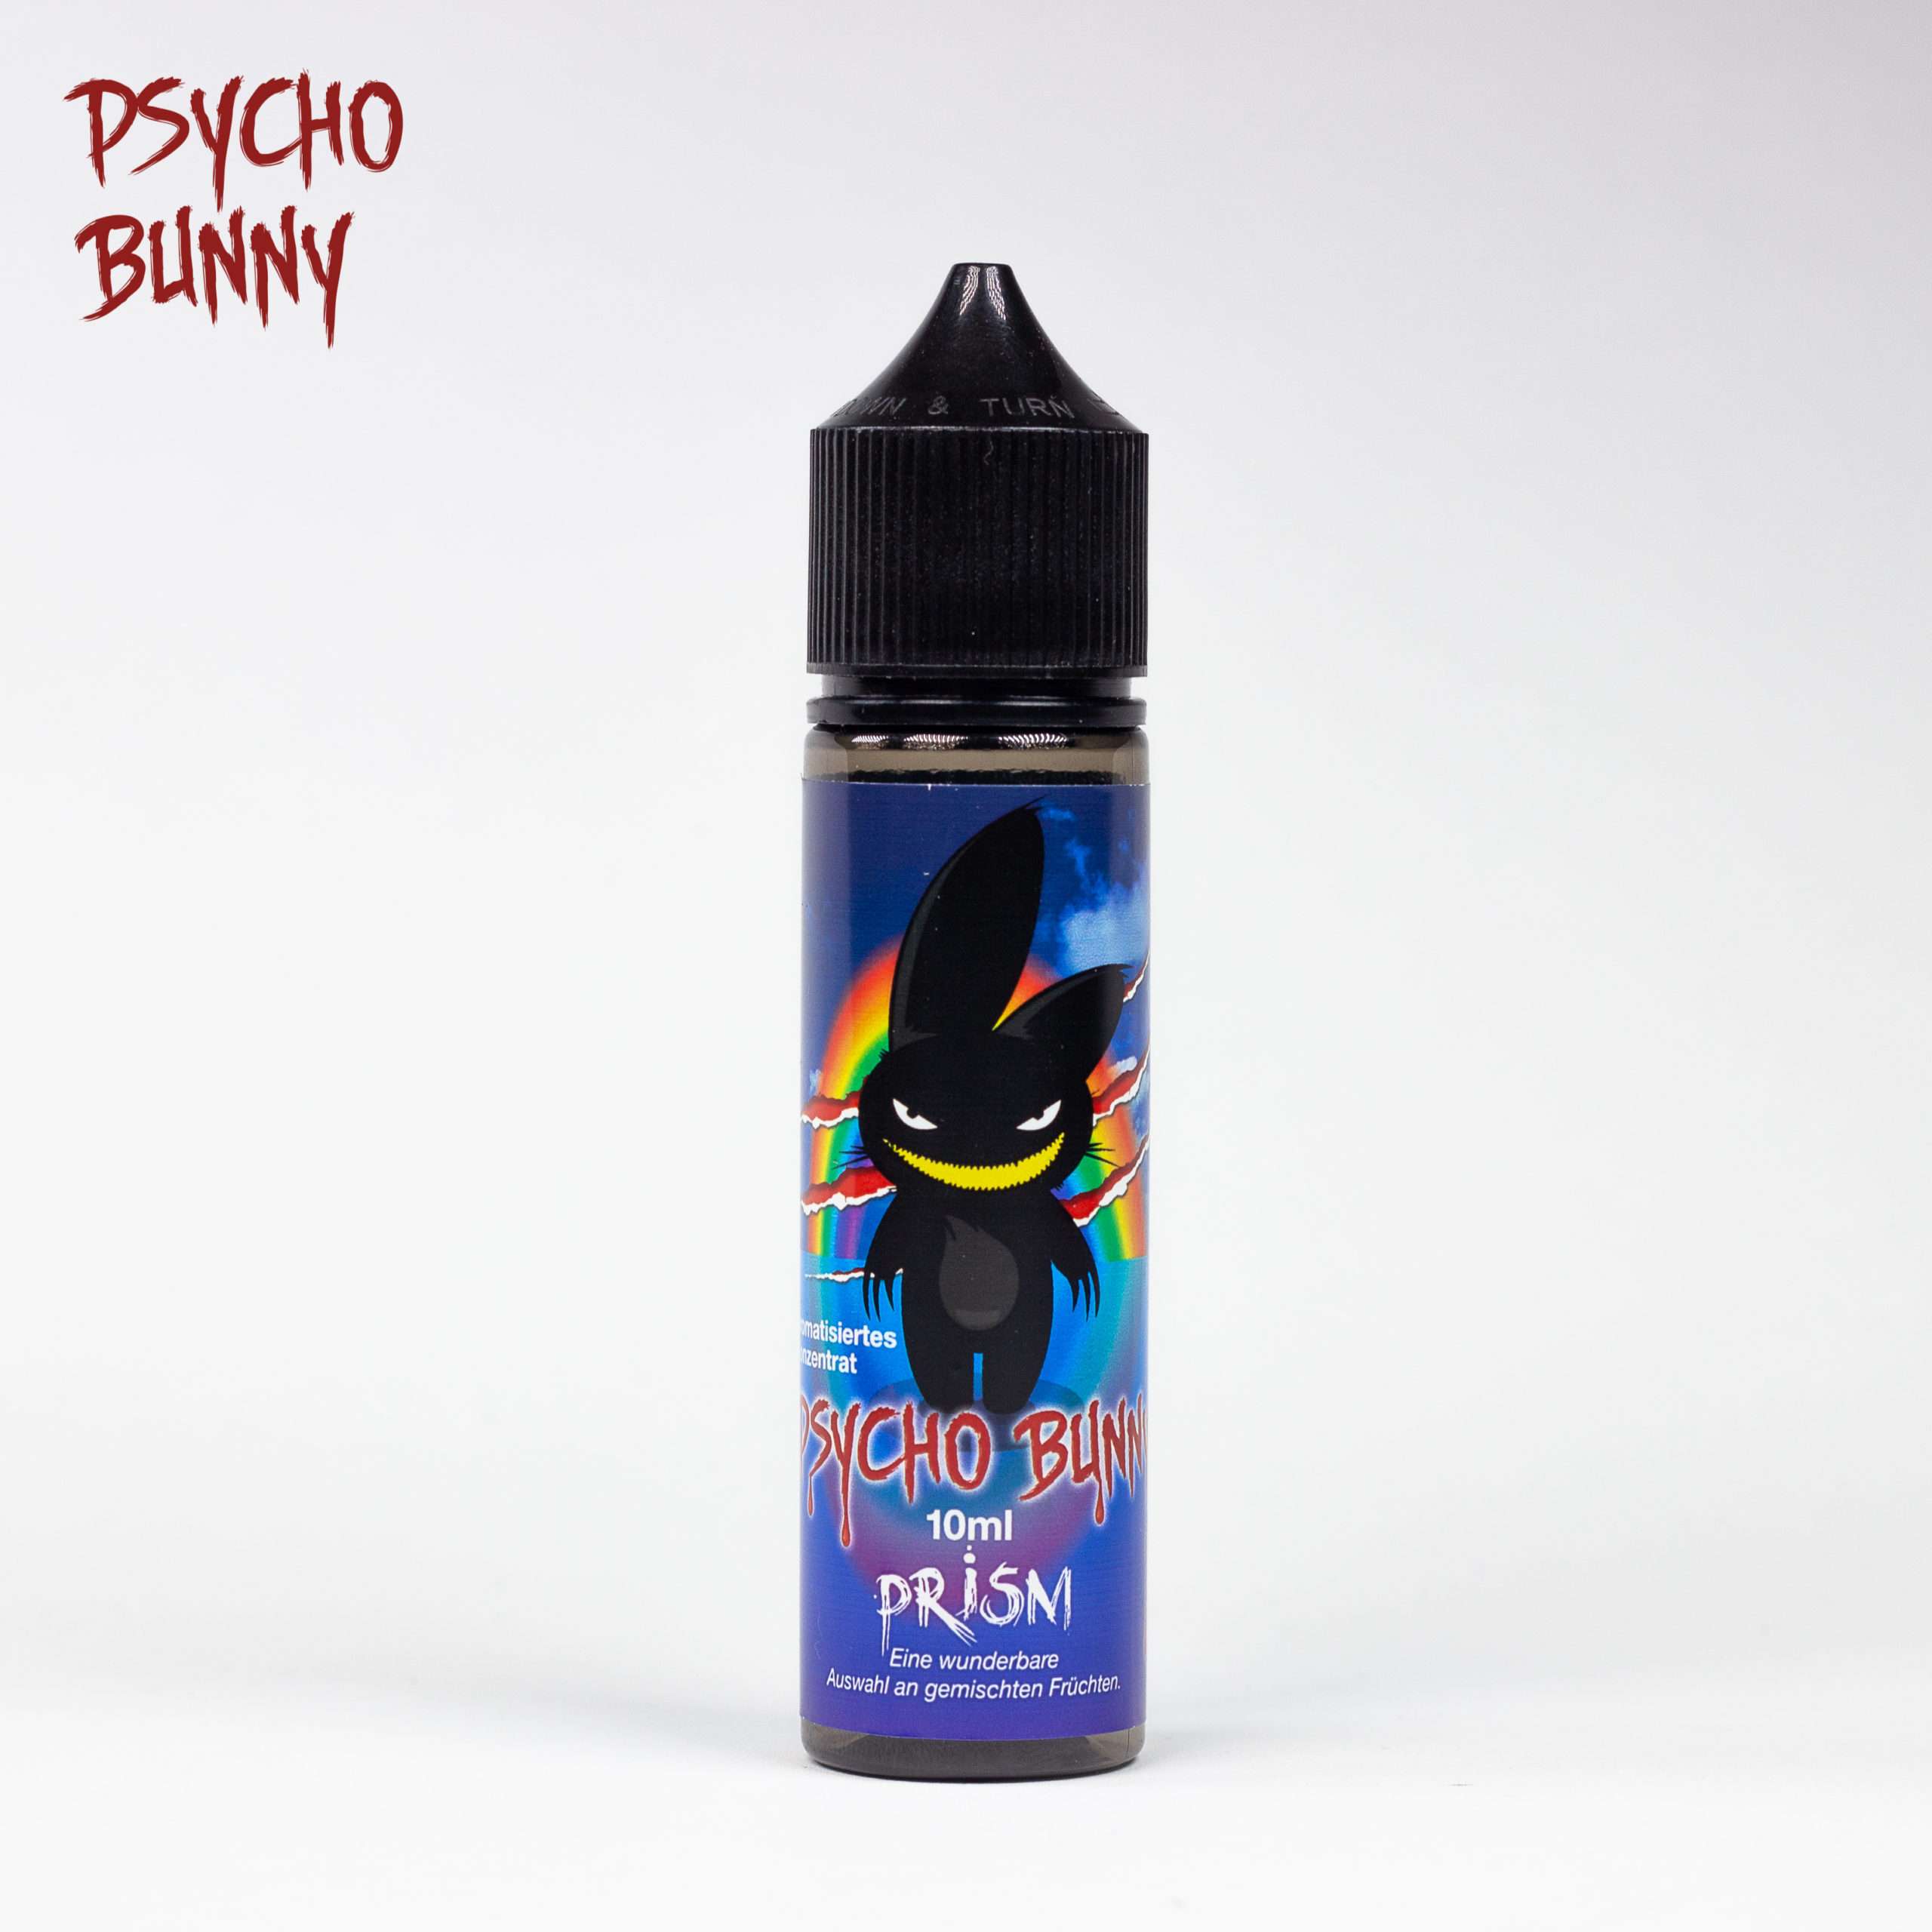  Psycho Bunny - Prism - 50ml 